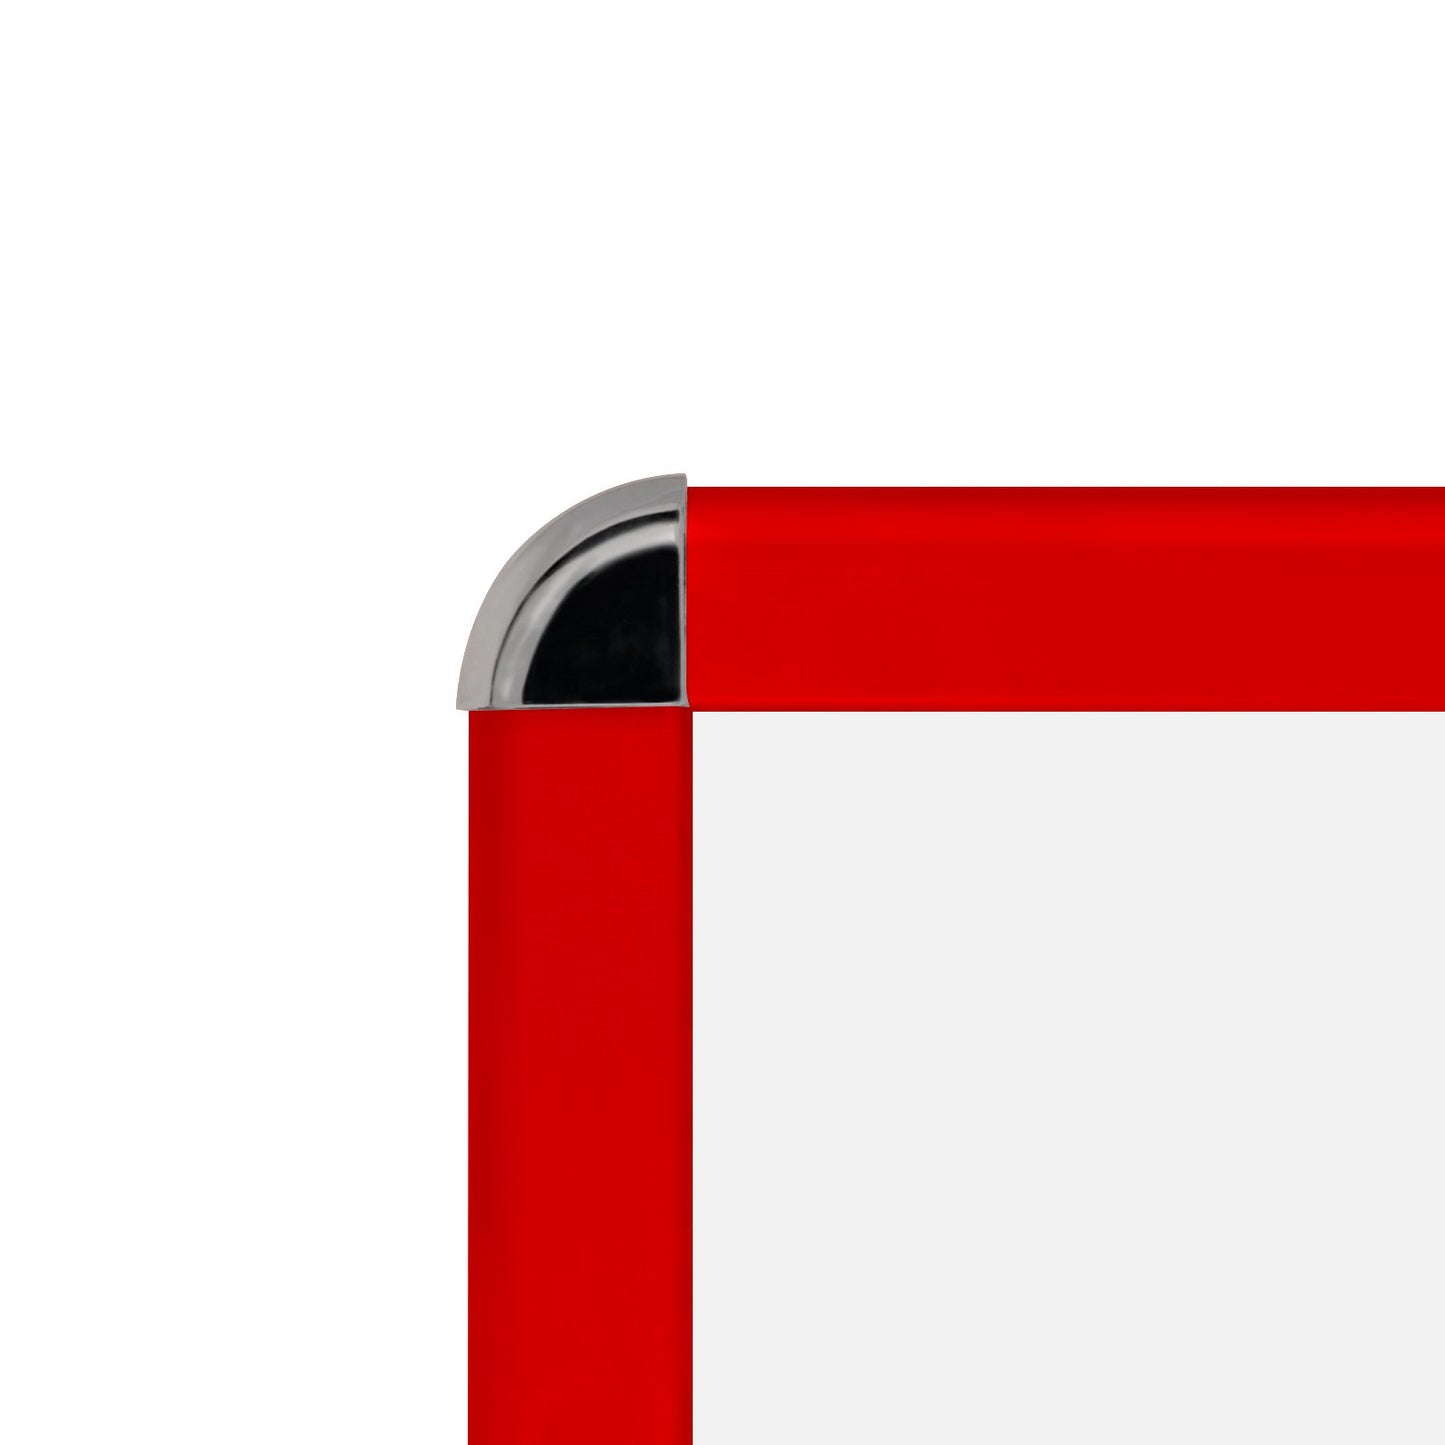 68,58 x 101,60 cm Marco a presión rojo de esquinas redondeadas - Perfil de 32 mm